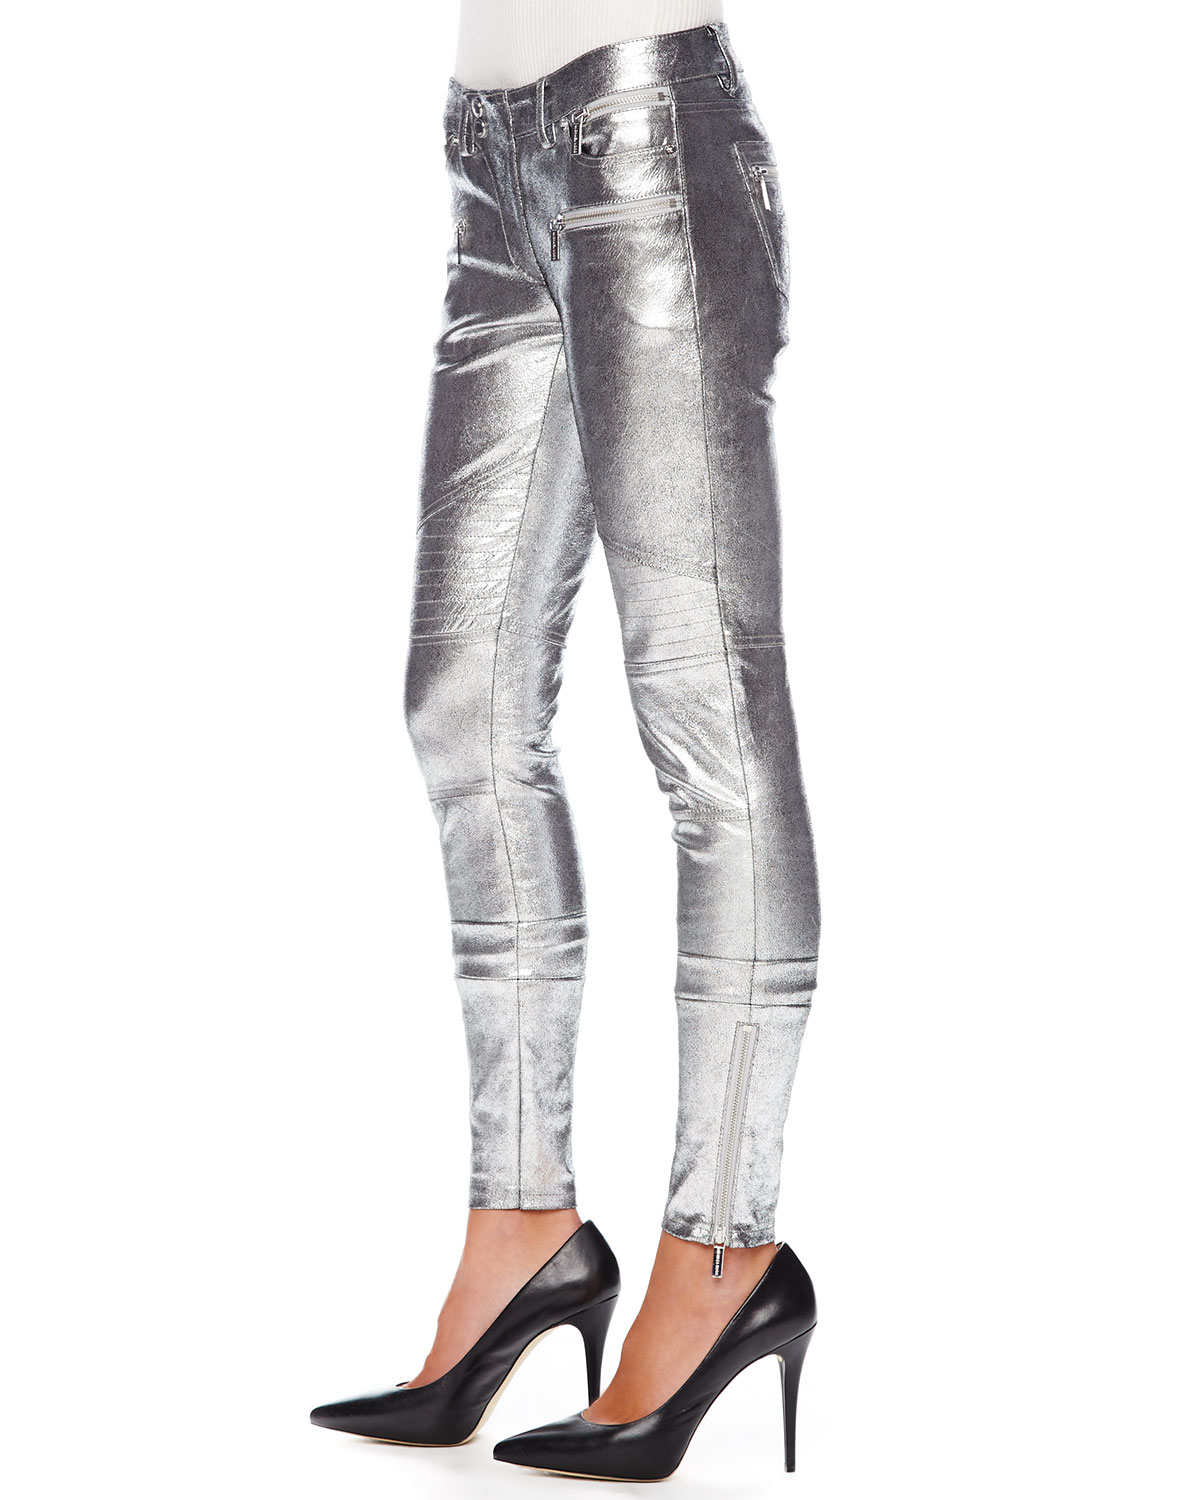 Michael Michael Kors Metallic Leather Moto Pants in Silver | Lyst